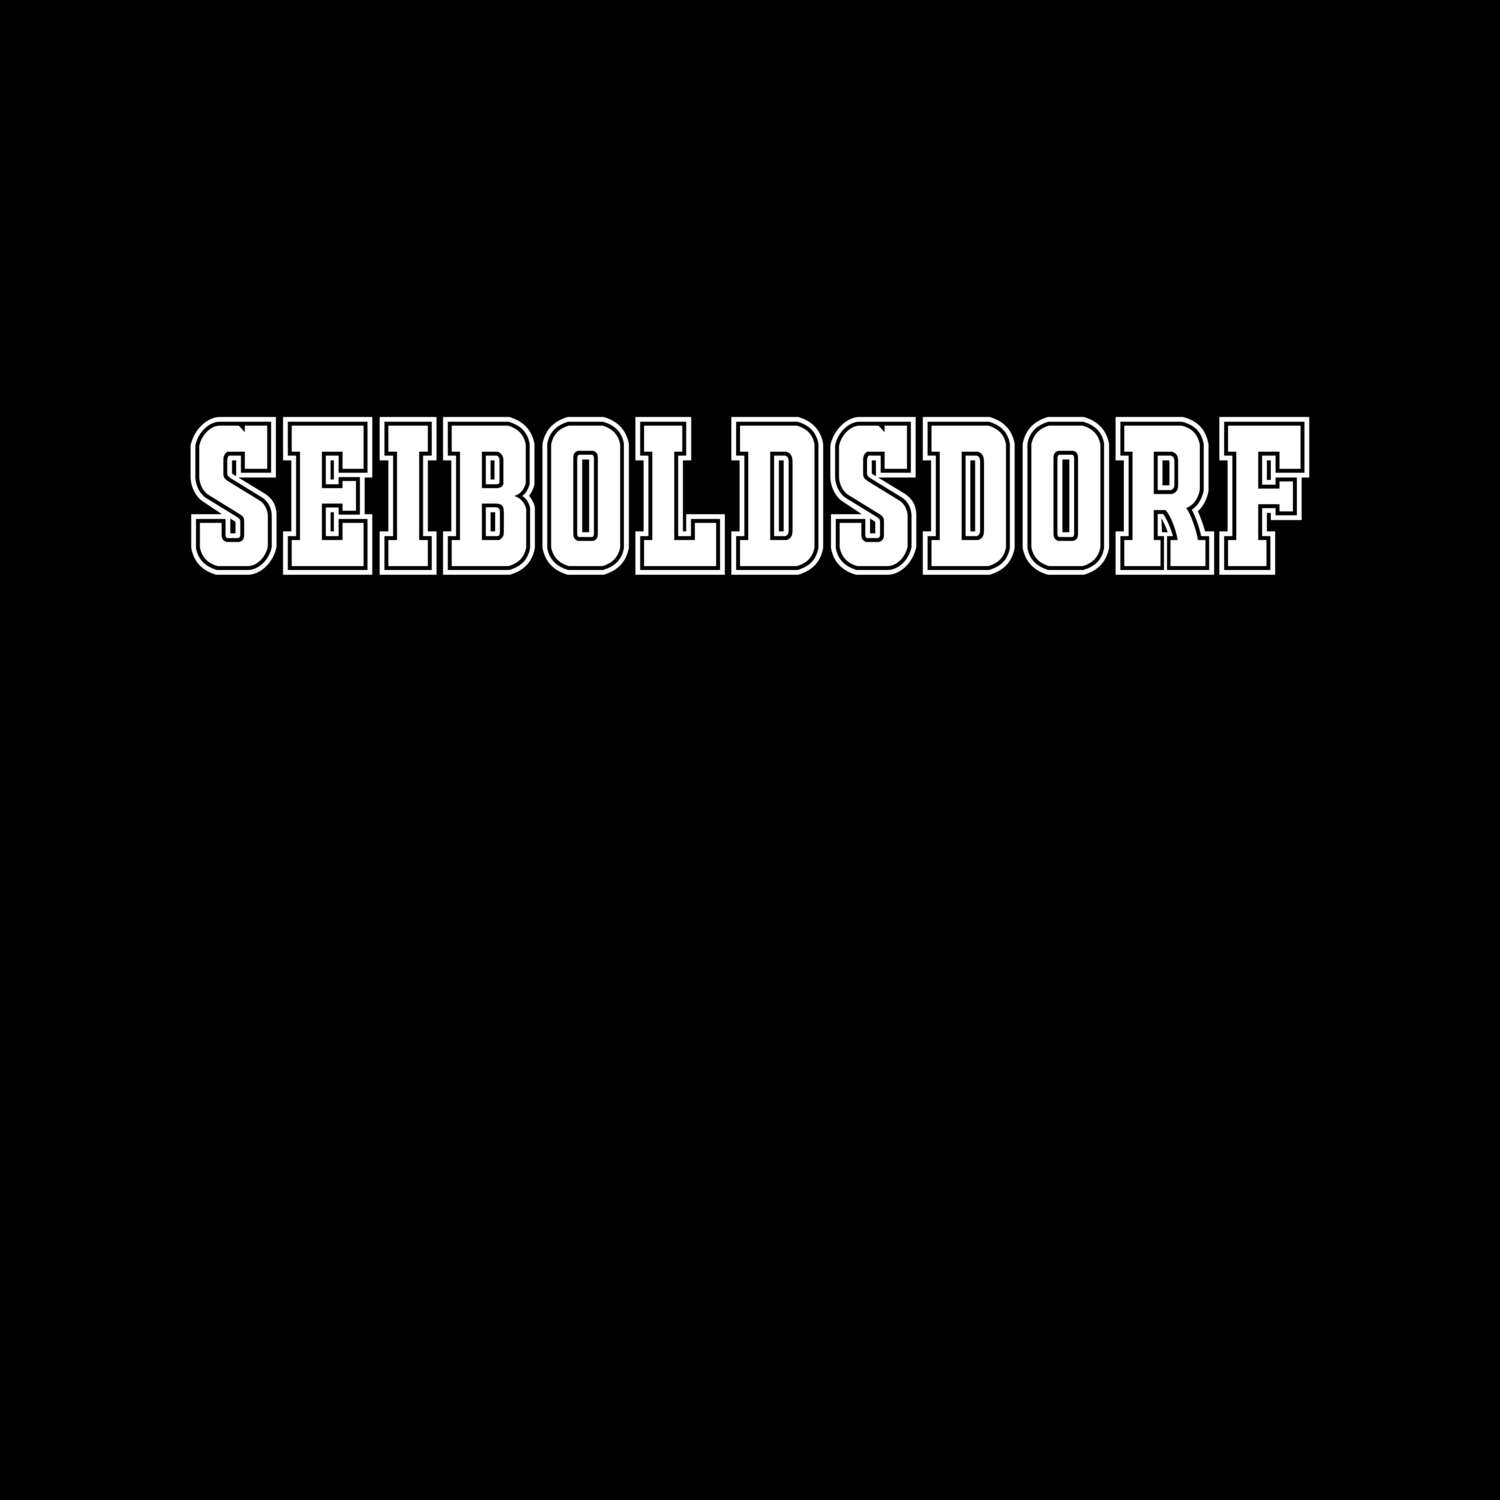 Seiboldsdorf T-Shirt »Classic«